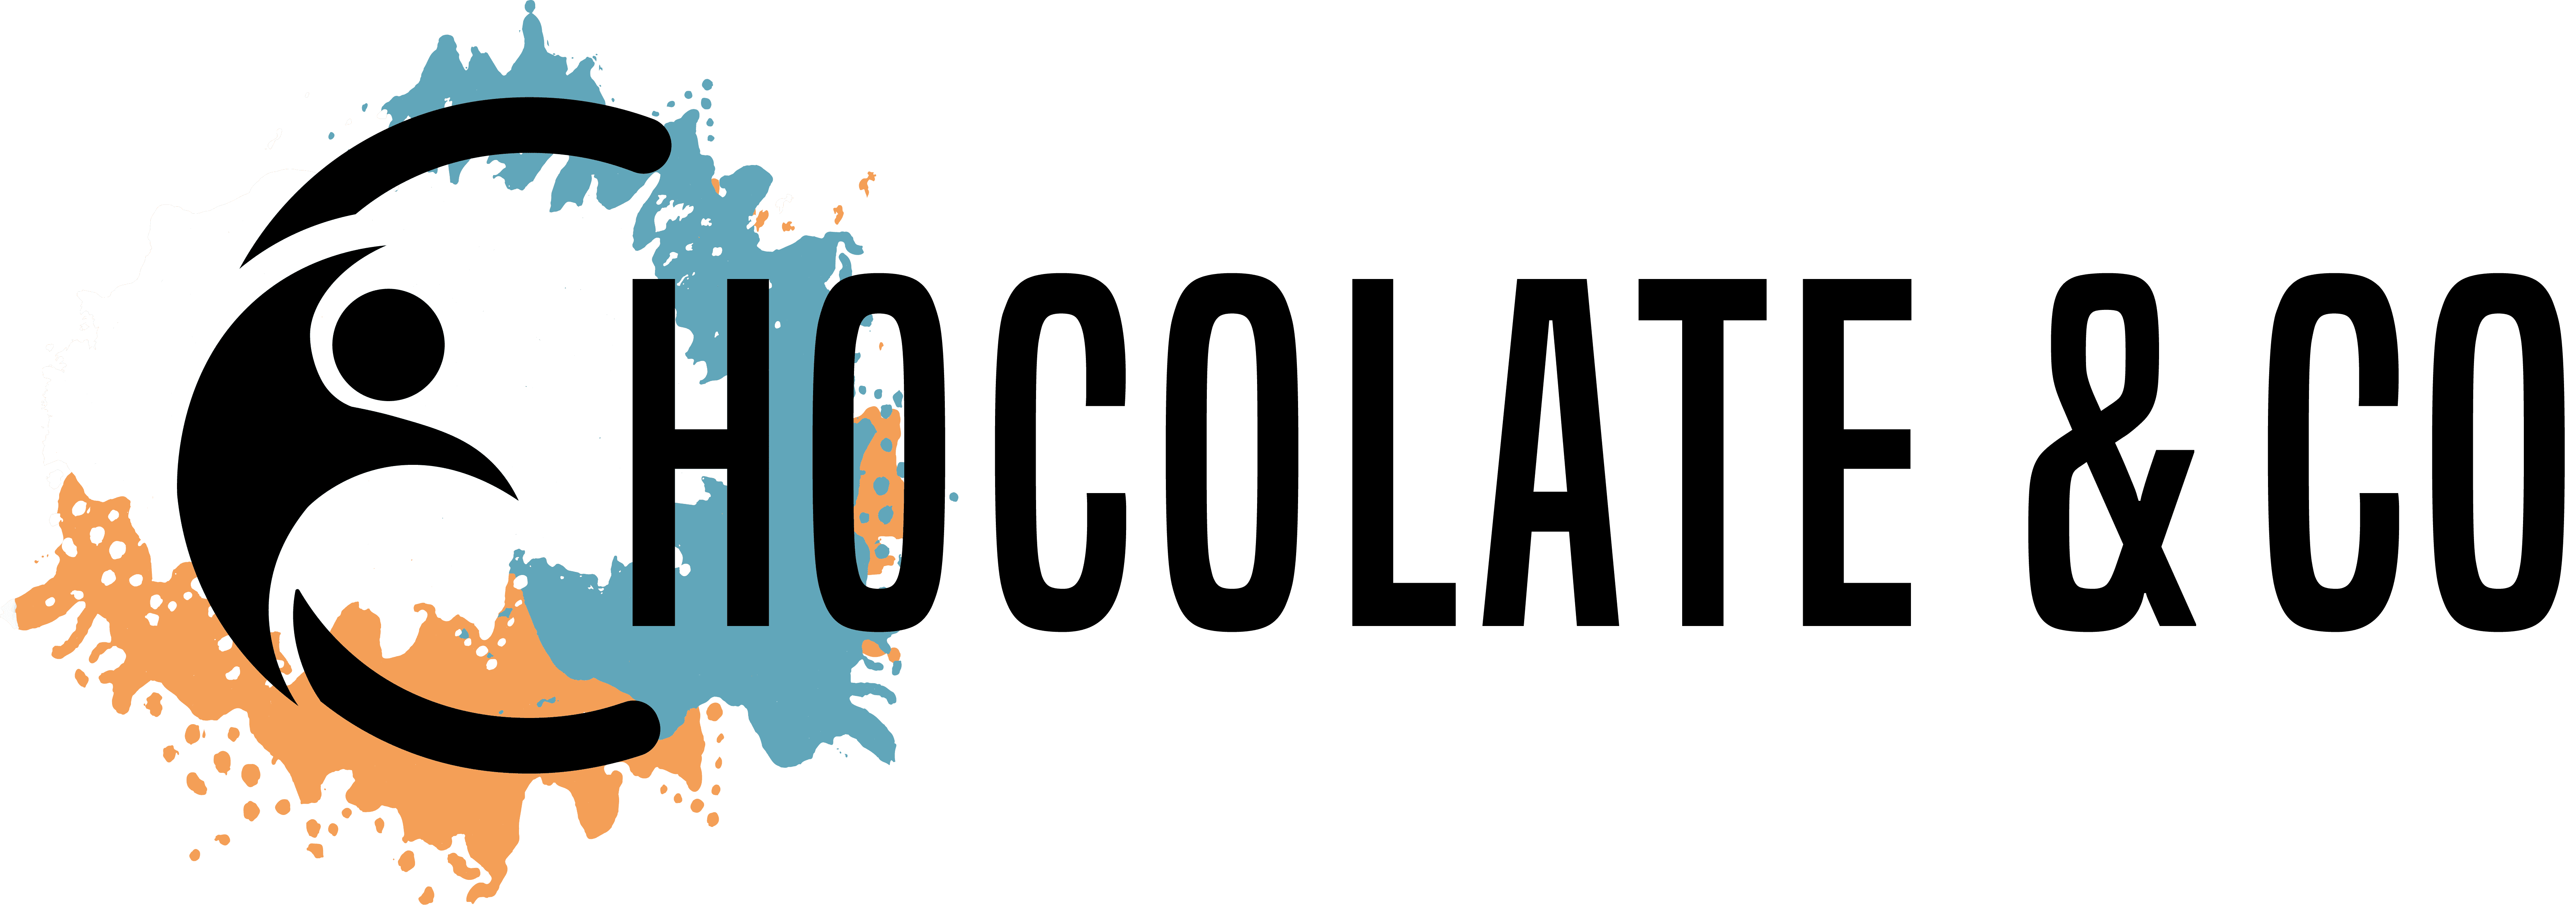 Chocolate & Co logo